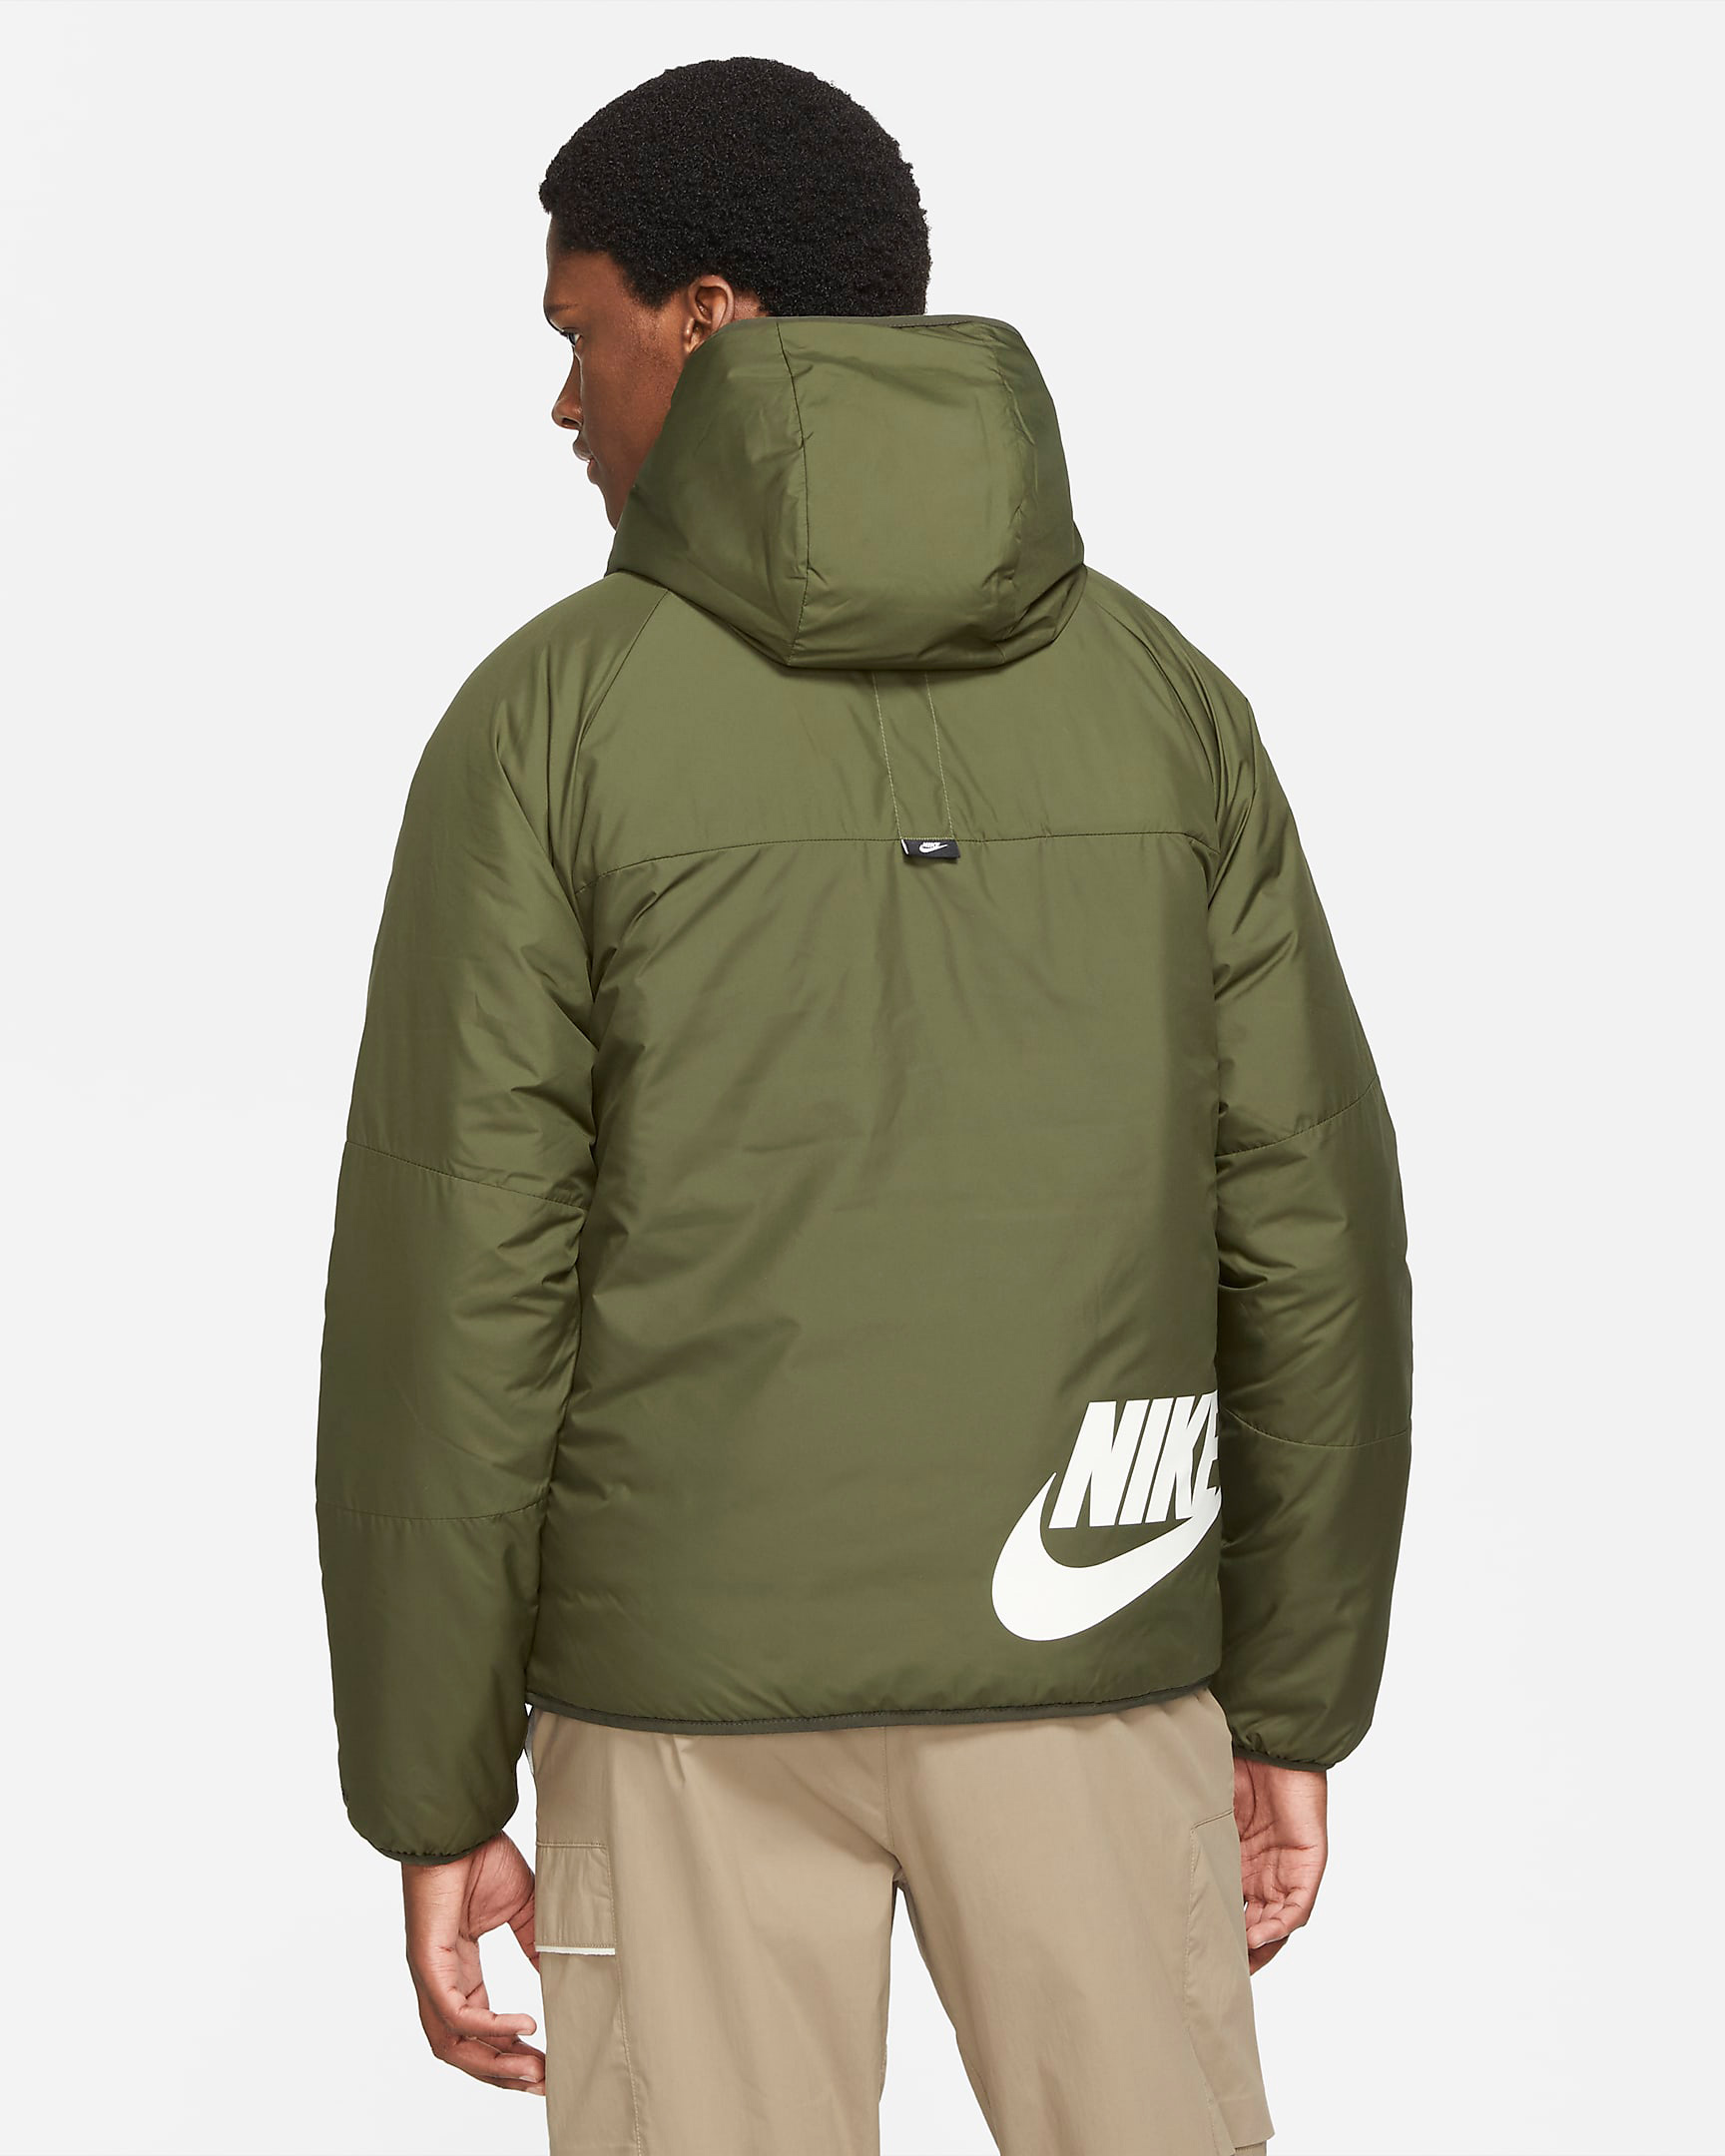 nike-rough-green-legacy-jacket-2